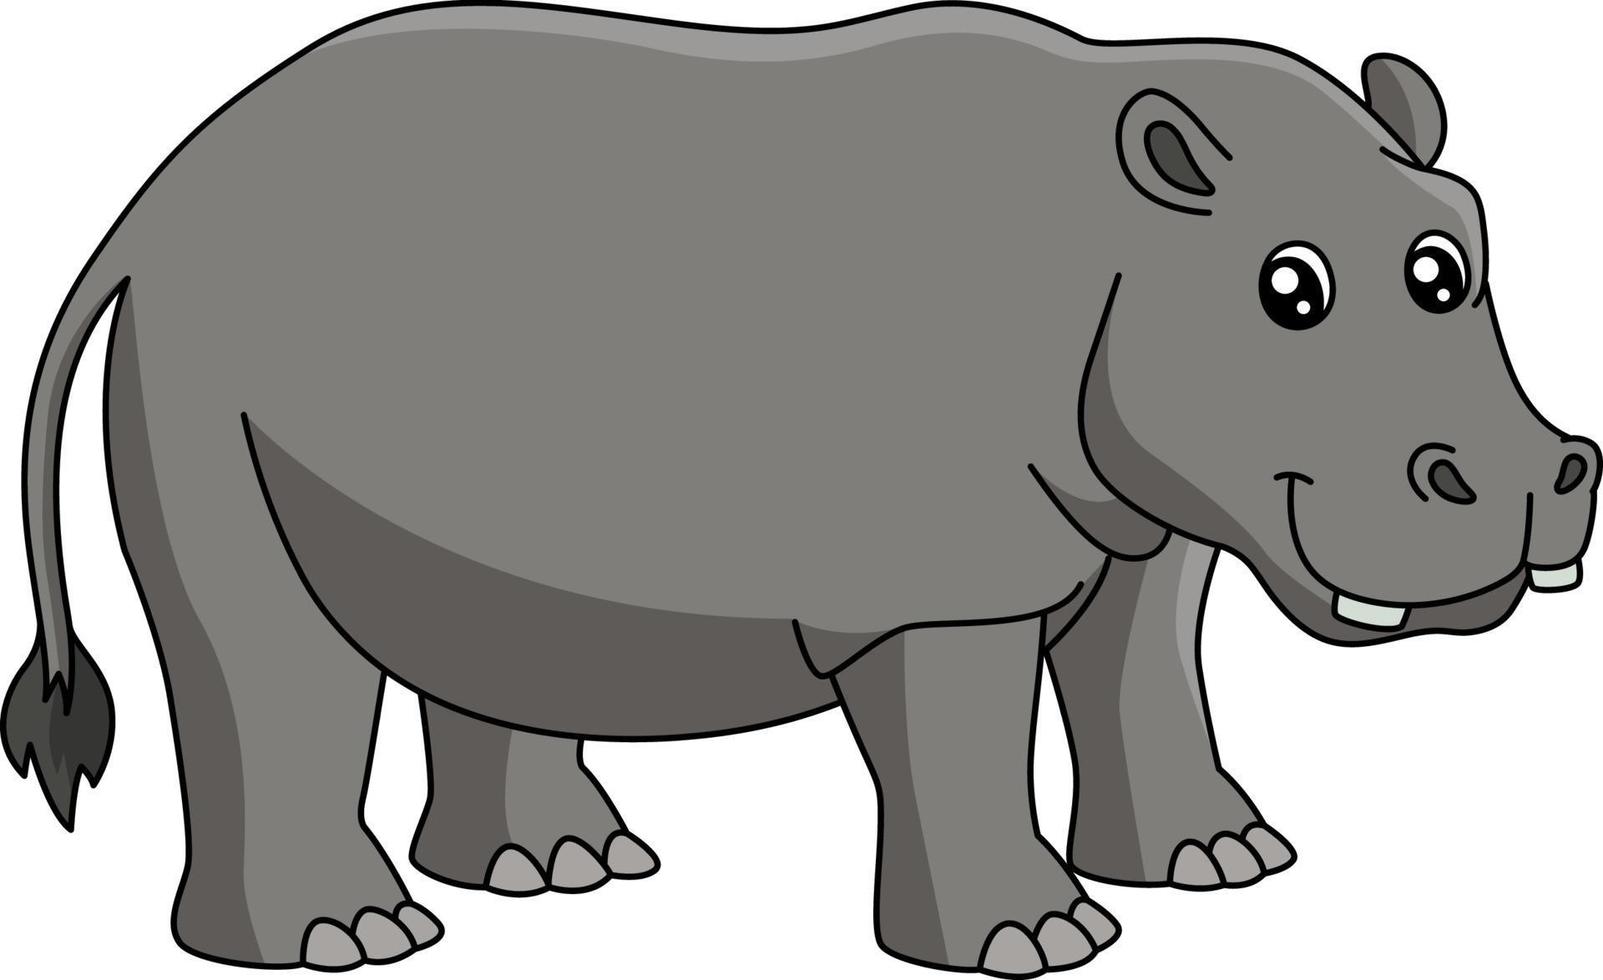 Hippo Cartoon Colored Clipart Illustration vector